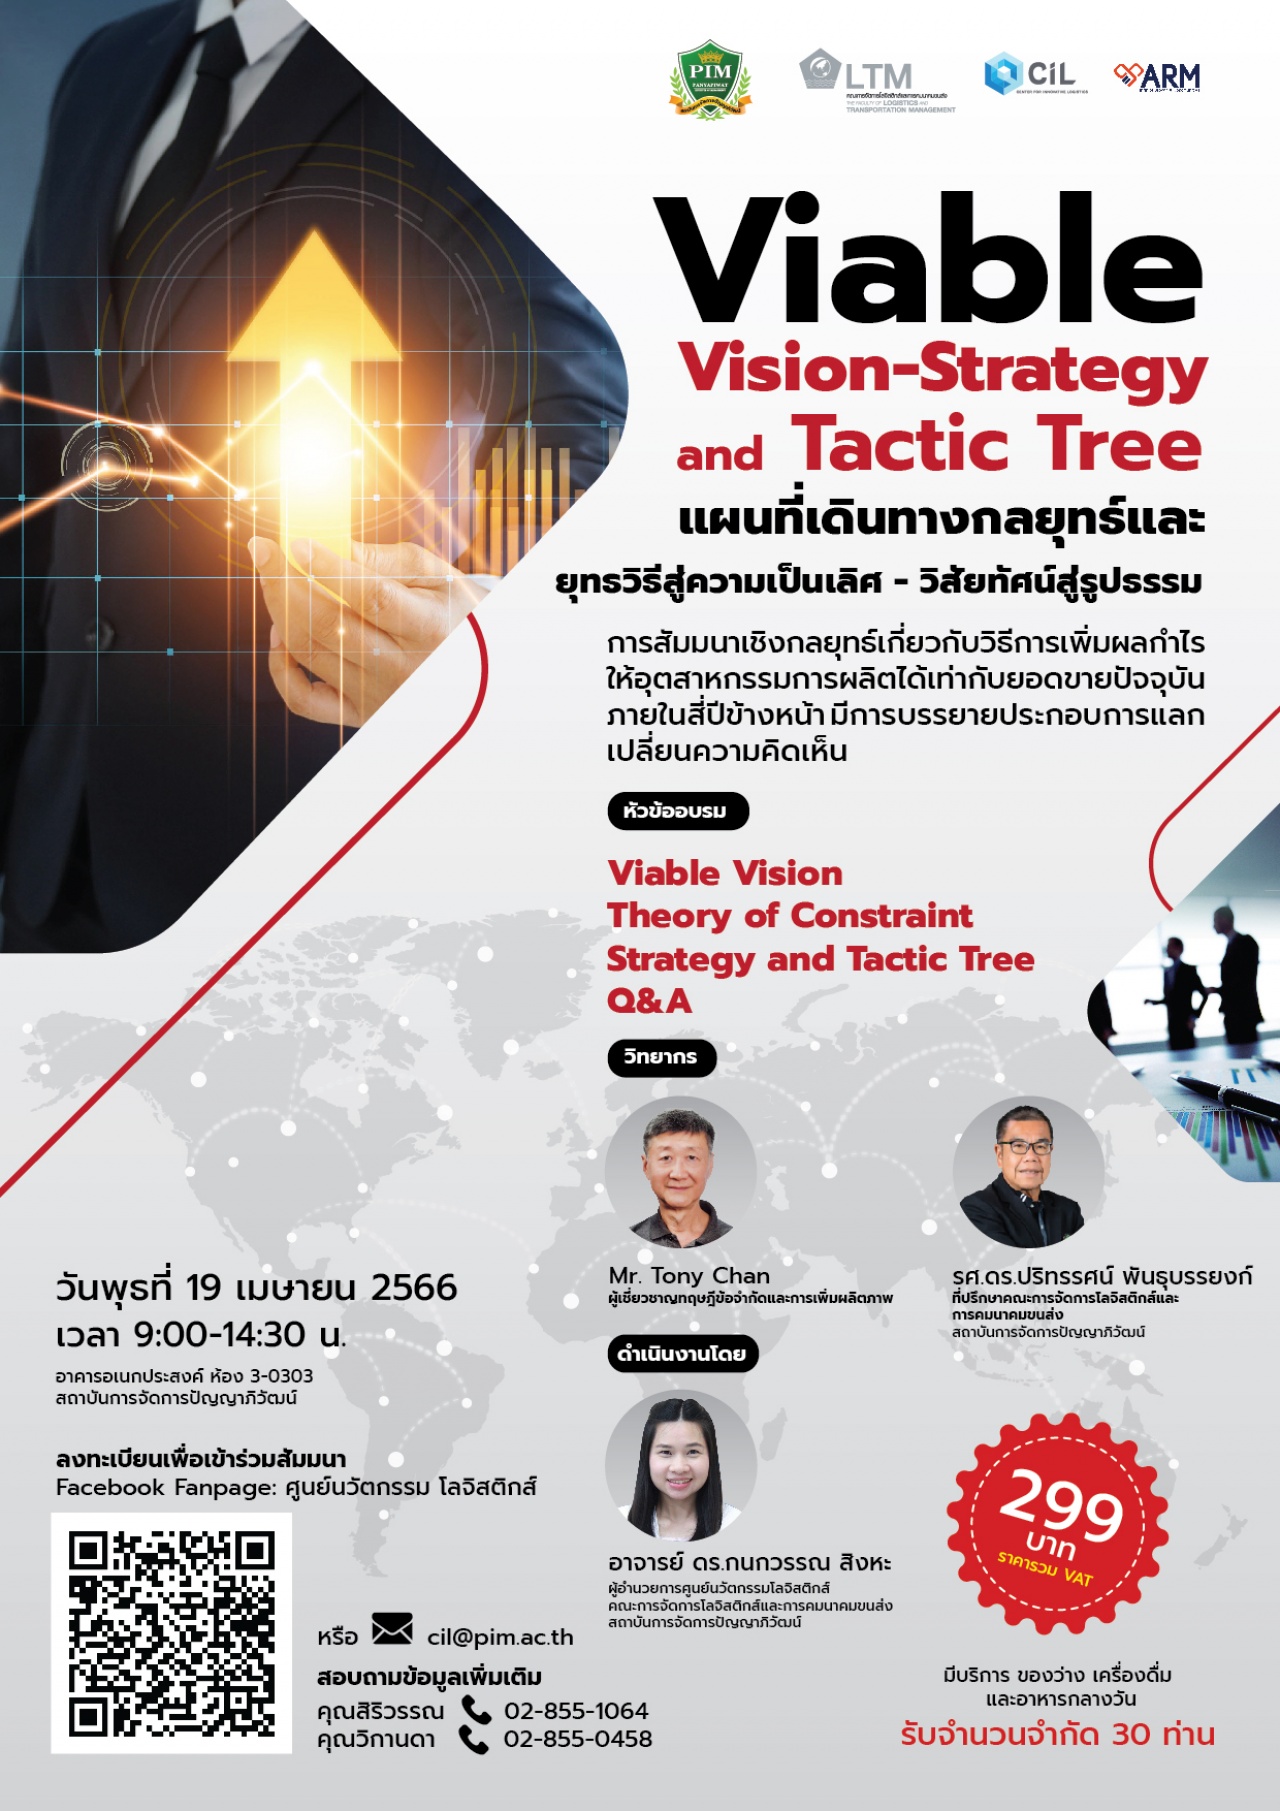 “Viable Vision-Strategy and Tactic Tree” “แผนที่เดินทางกลยุทธ์และยุทธวิธีสู่ความเป็นเลิศ- วิสัยทัศน์สู่รูปธรรม”